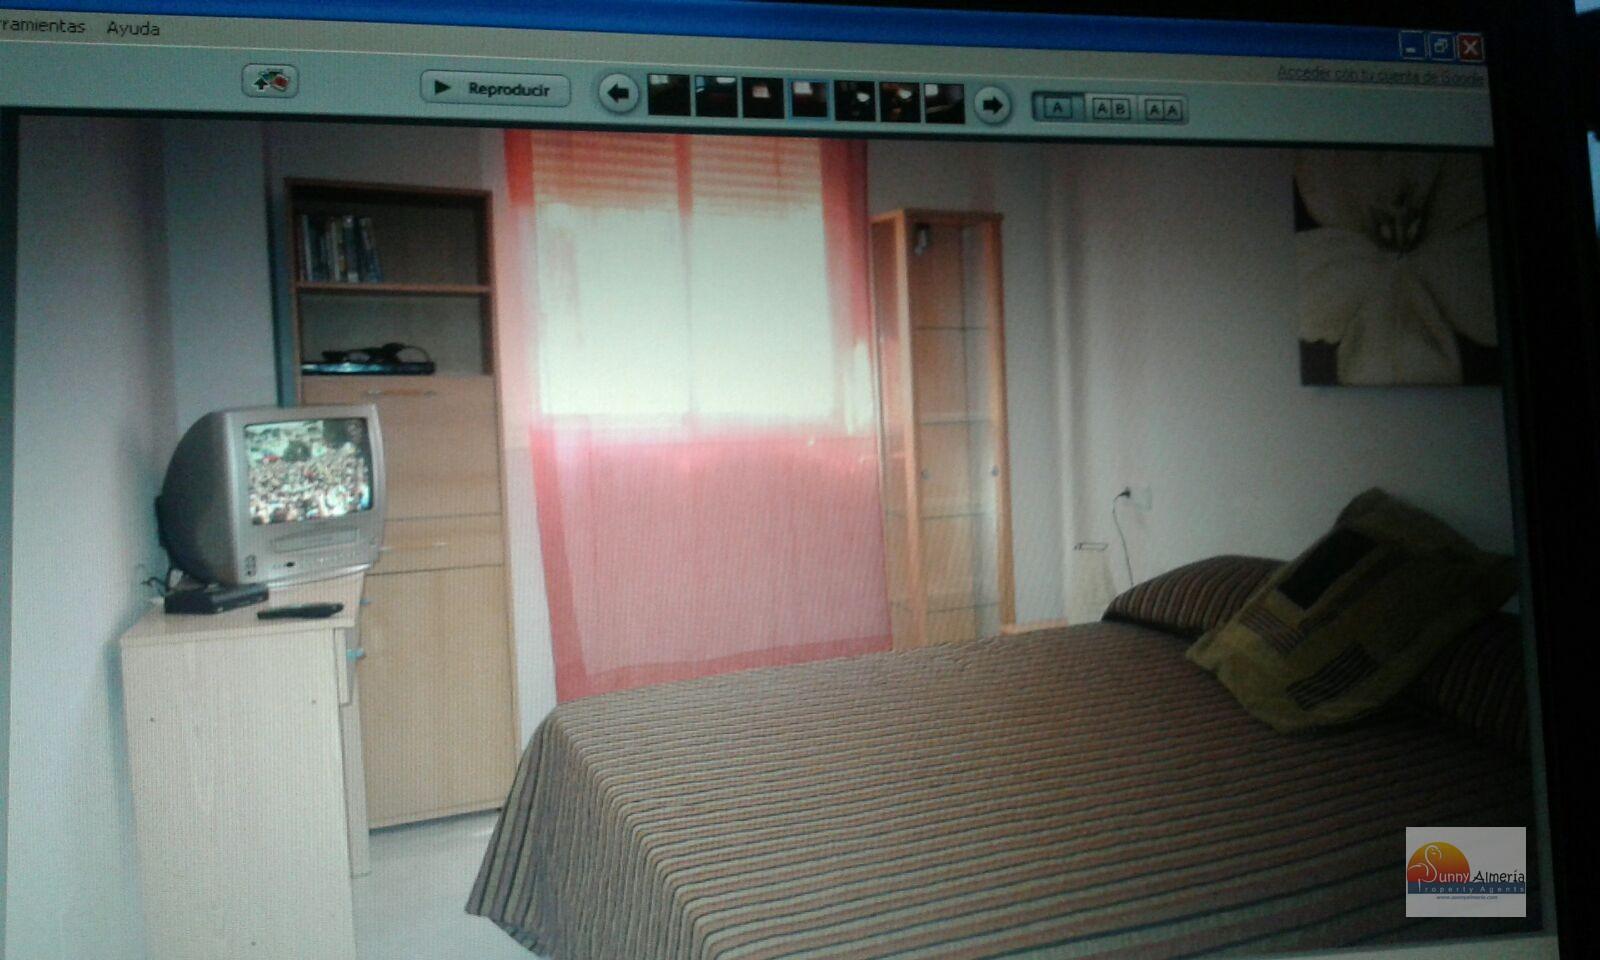 Apartment for rent in calle aviacion 0 (Roquetas de Mar), 550 €/month